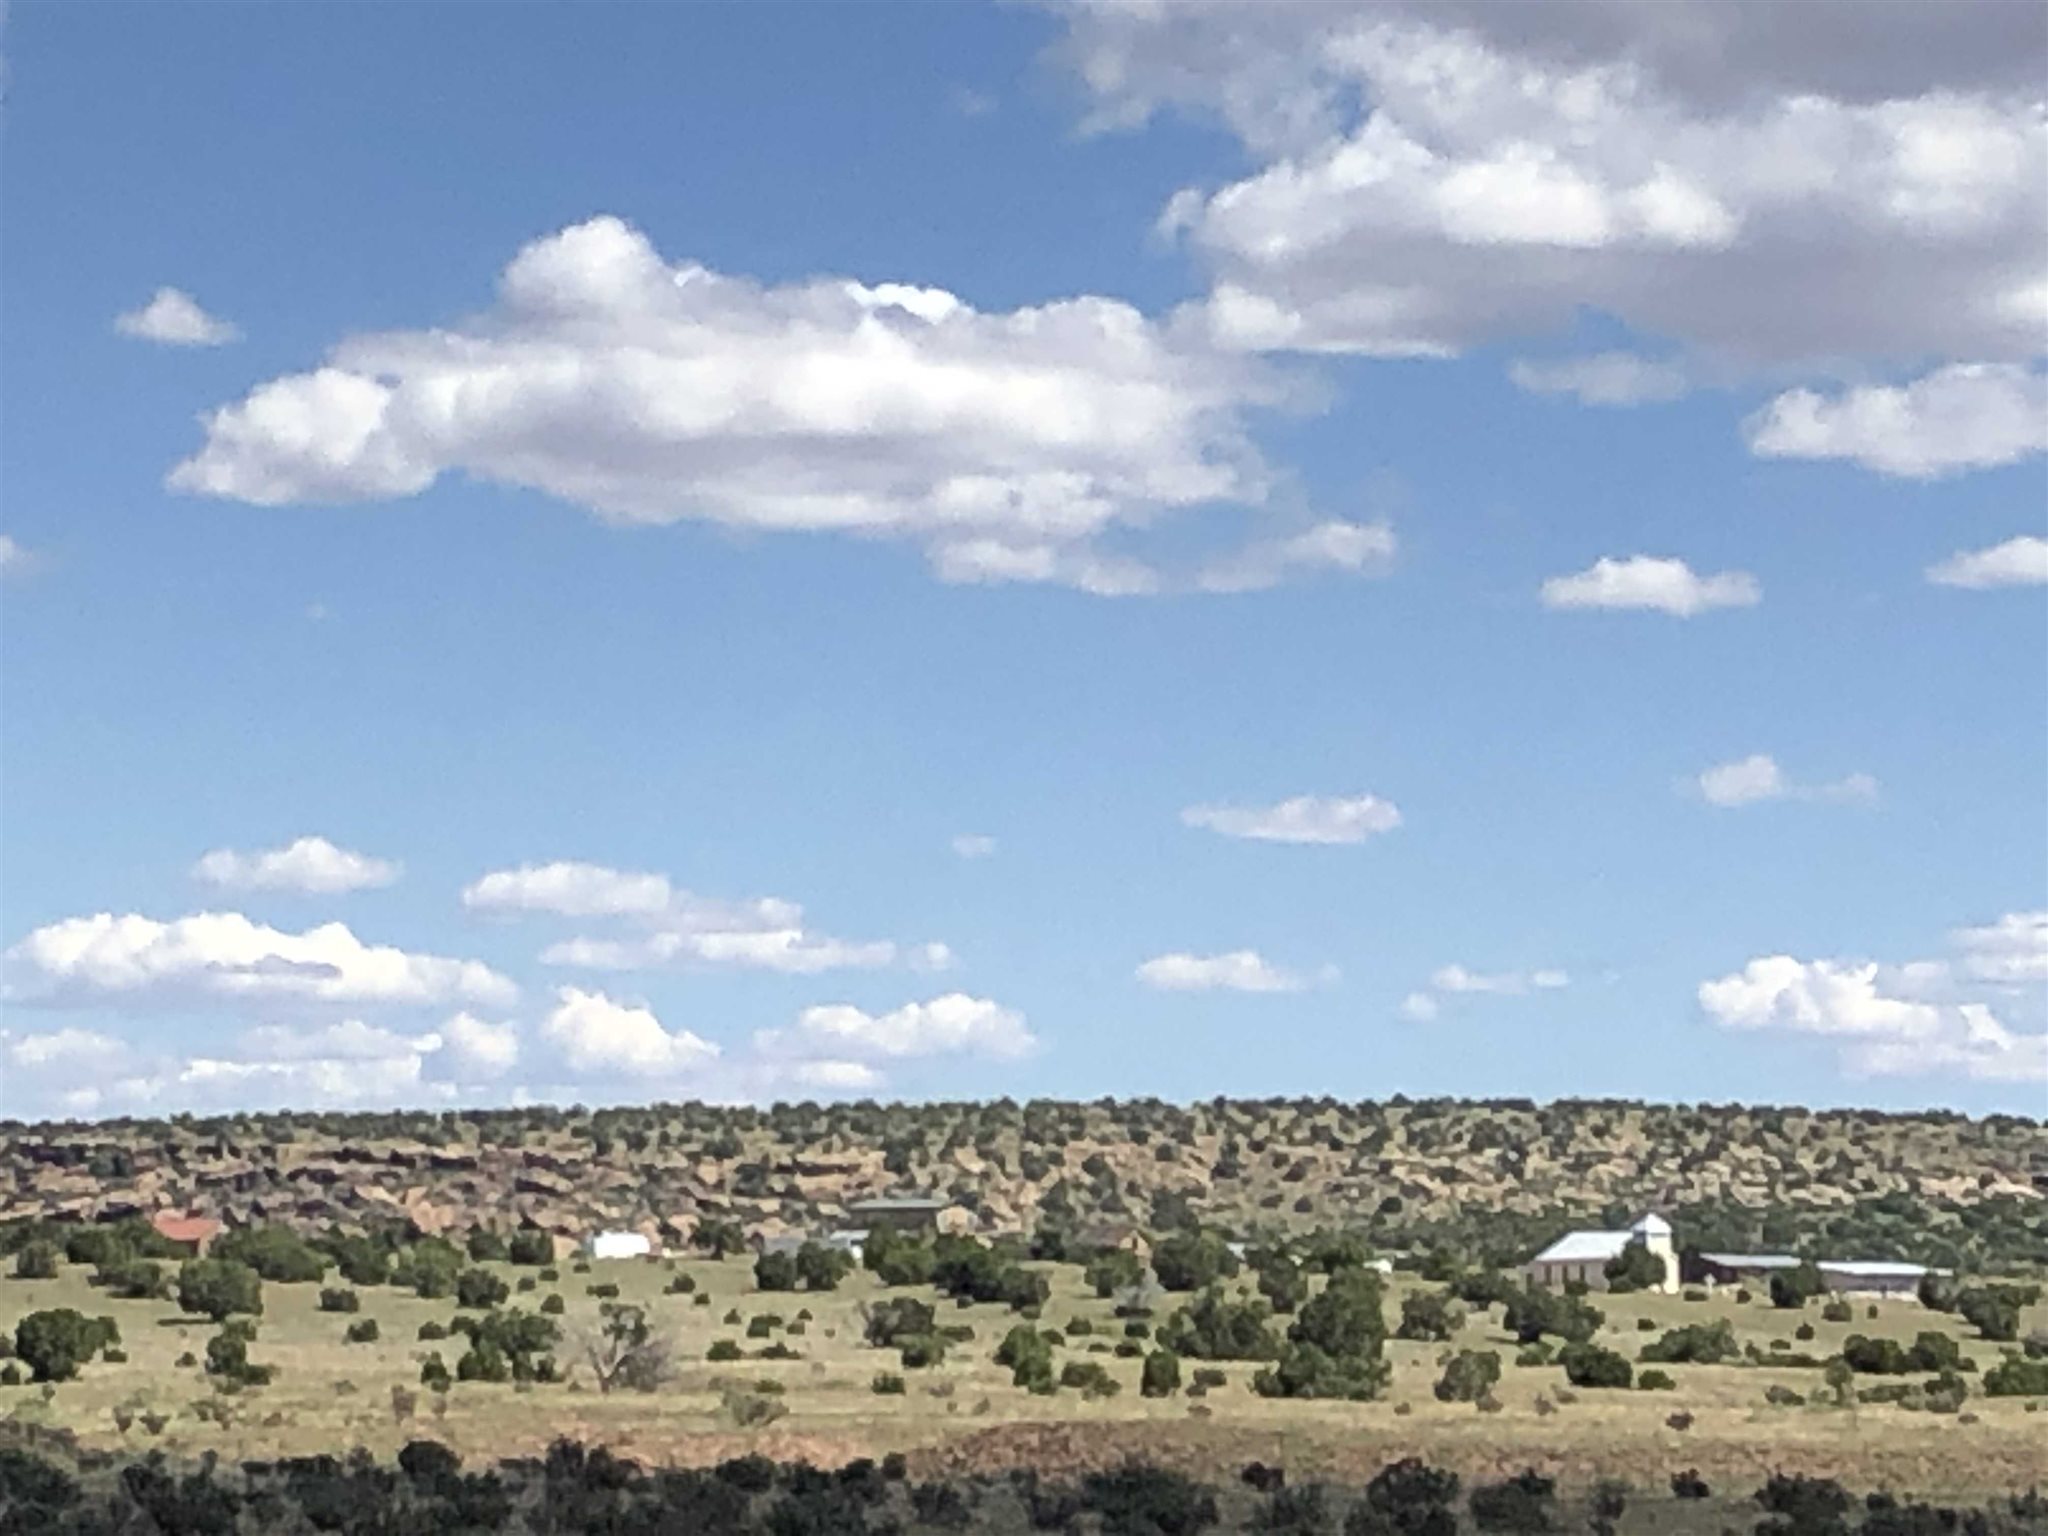 39 Pintada Loop, Santa Rosa, New Mexico 88435, ,Land,For Sale,39 Pintada Loop,201903055